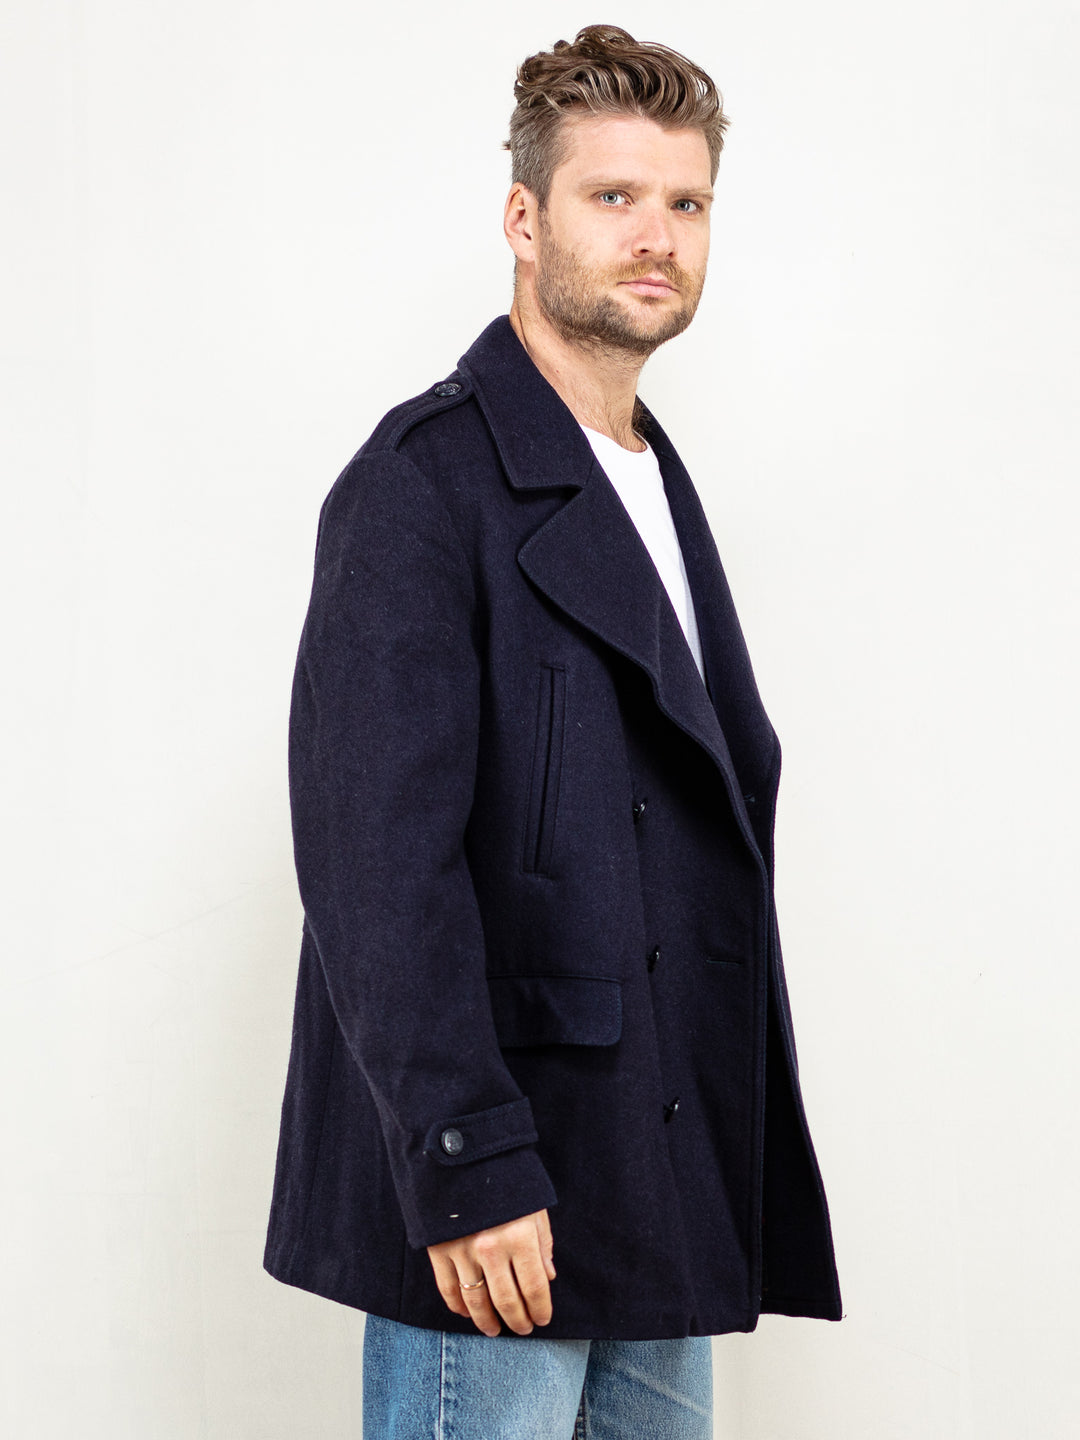 Men Wool Coat vintage 70’s blue wool winter maxi overcoat boho western sustainable clothing fashion winter western outerwear size large